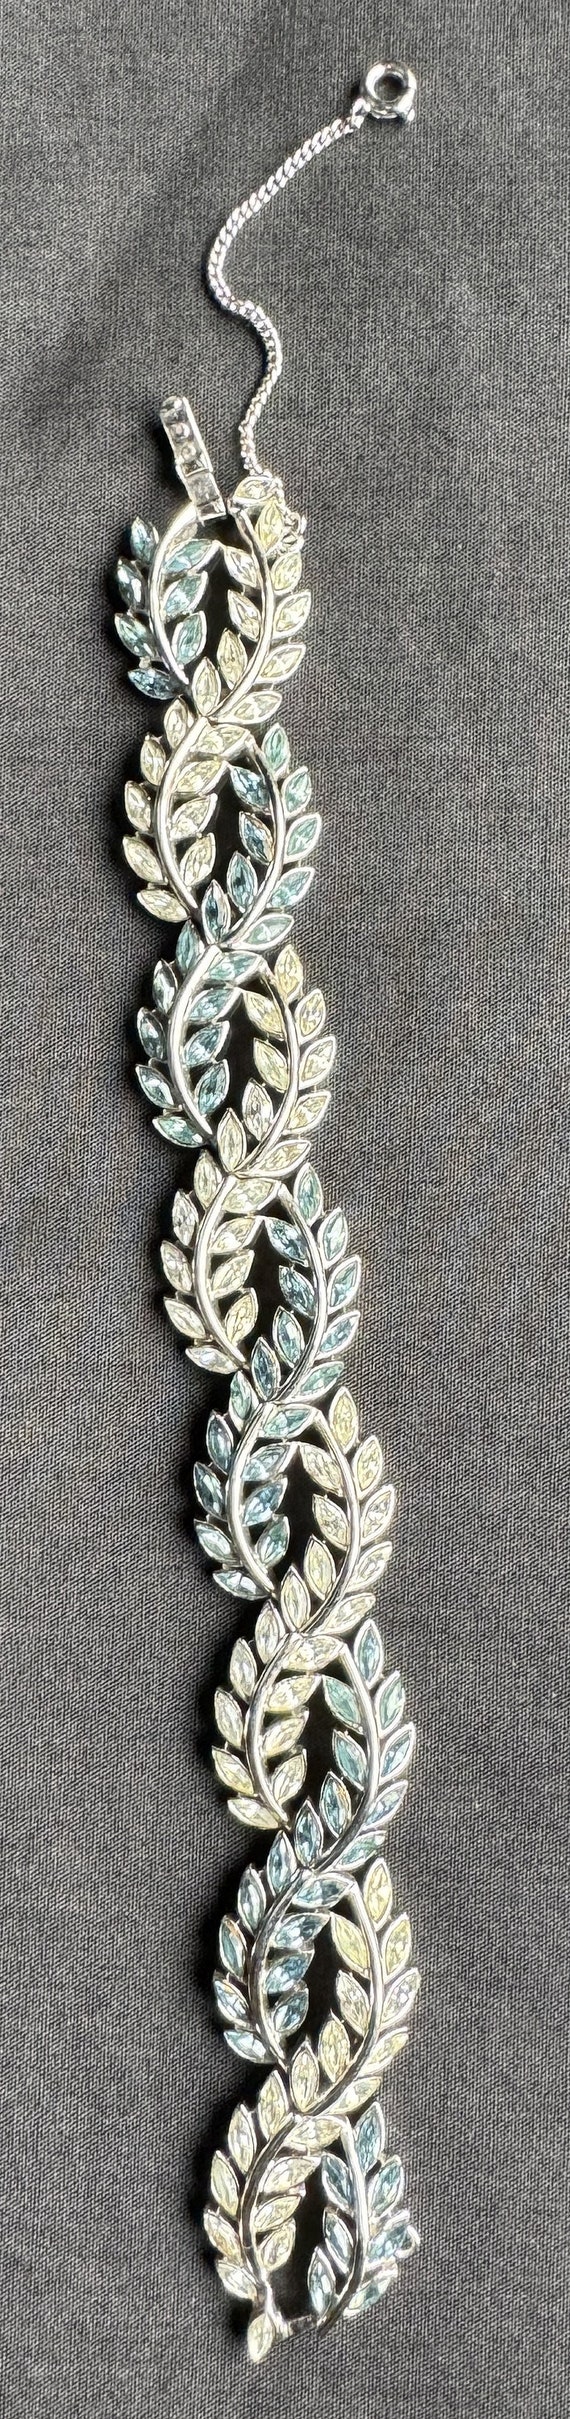 Crown Trifari bracelet silver tone with leaf shape